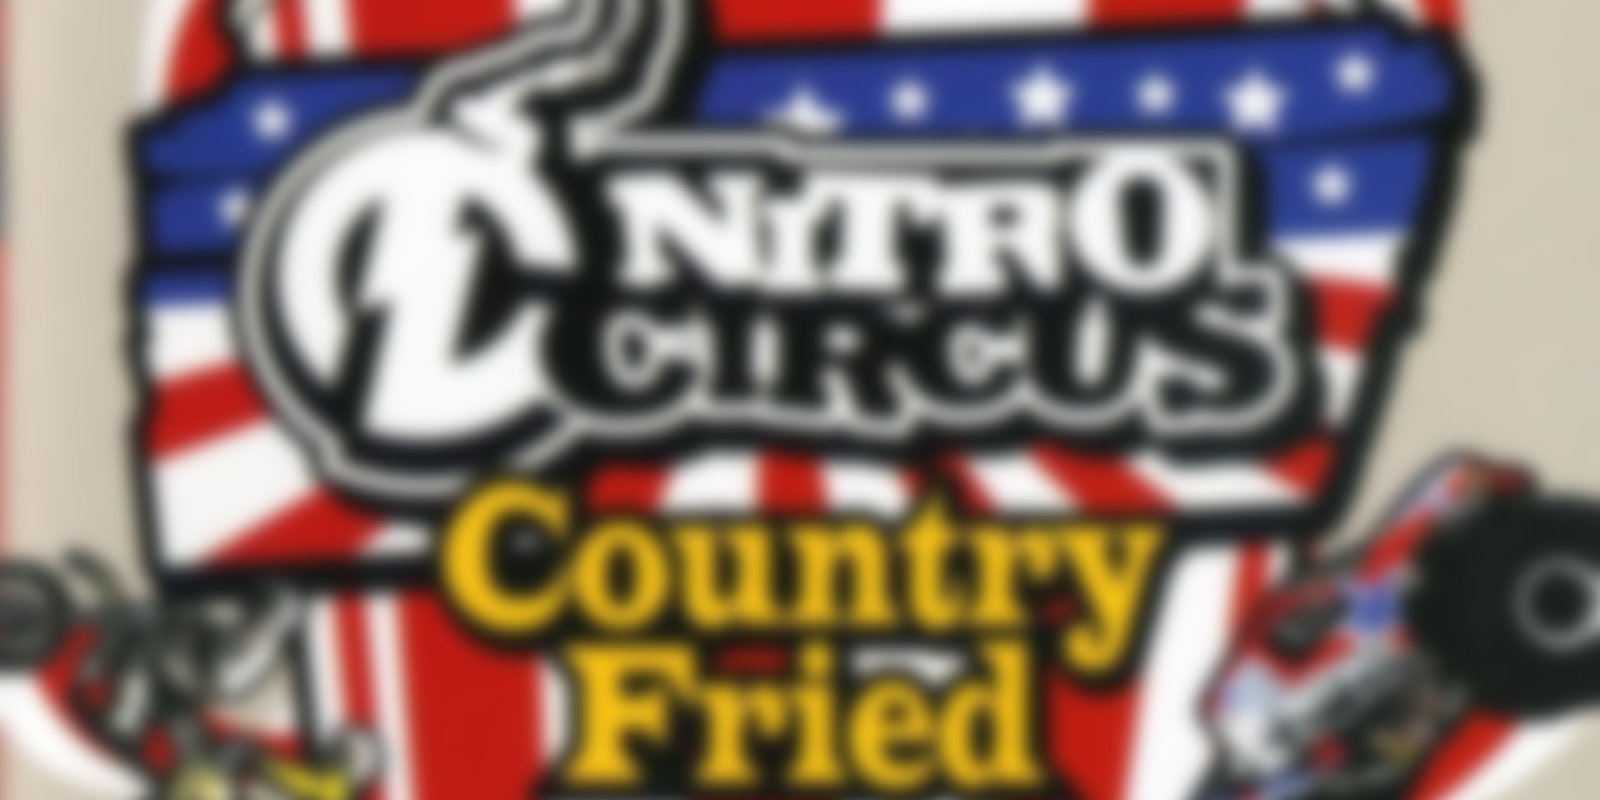 Nitro Circus 7 - Country Fried